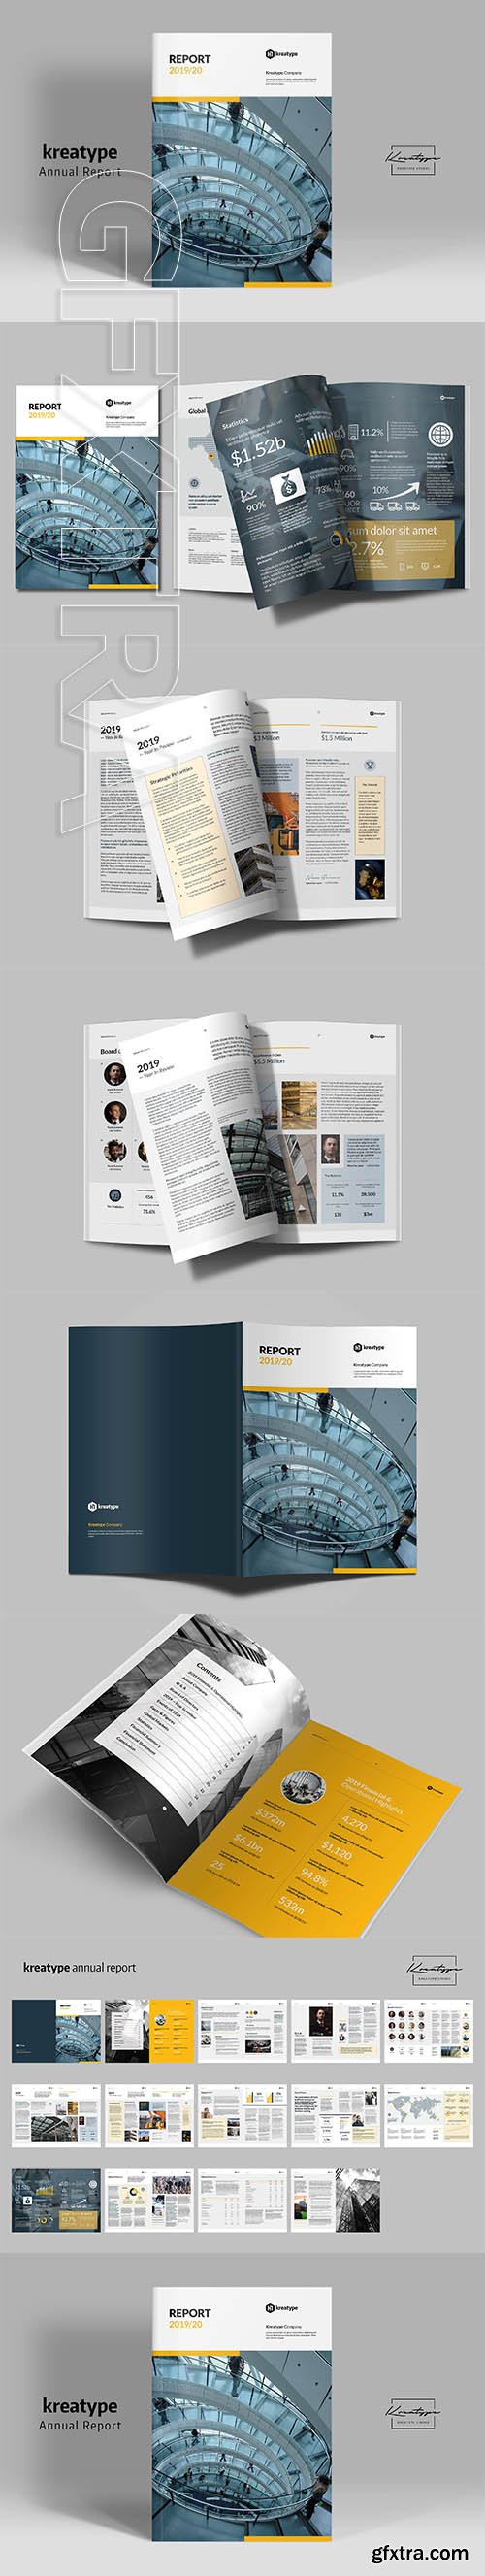 CreativeMarket - Kreatype Annual Report 3376802